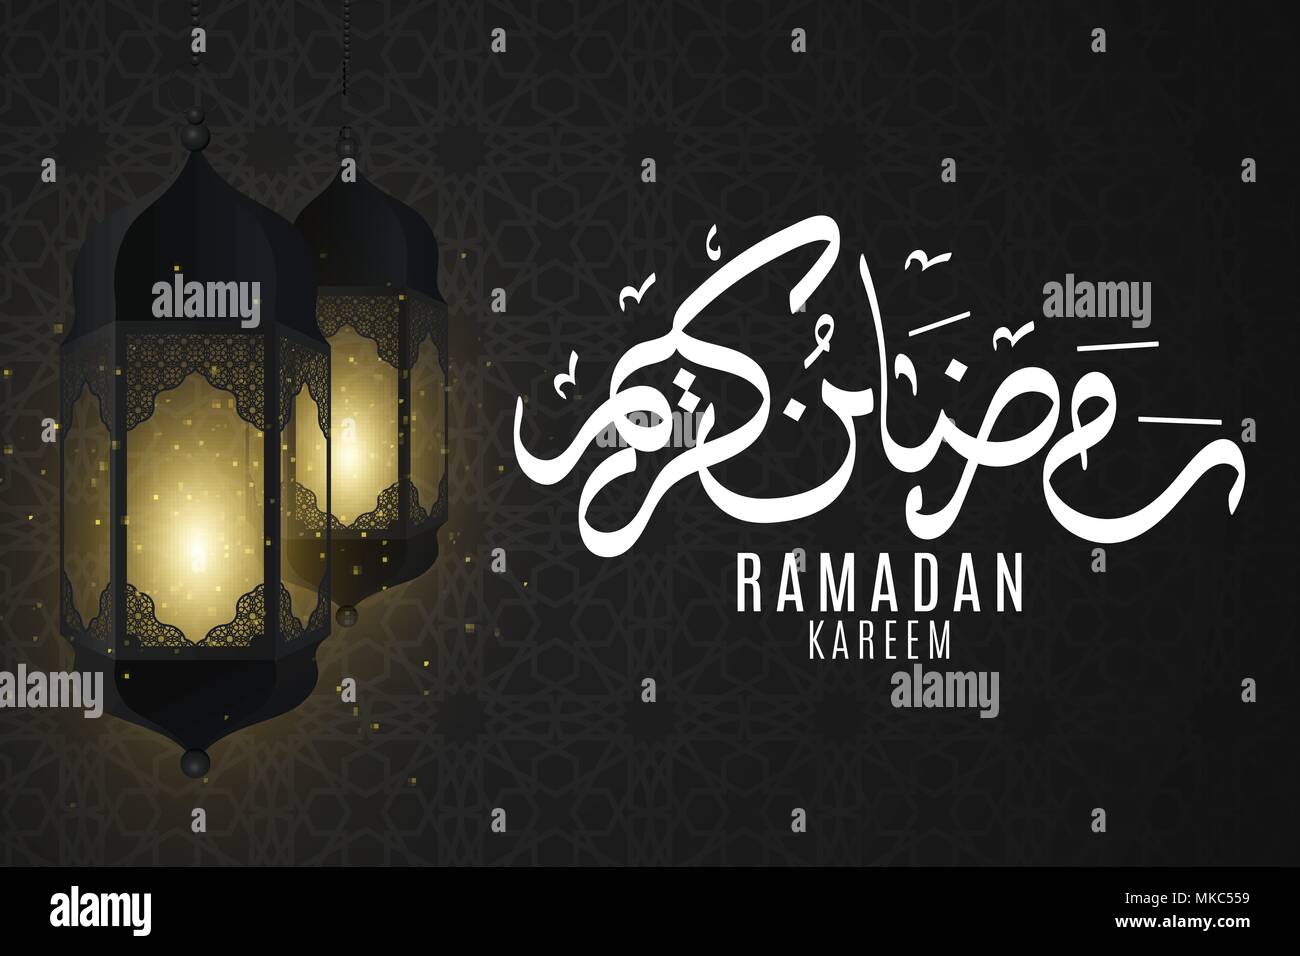 Ramadan Mubarak Black Background Buy This Stock Vector And